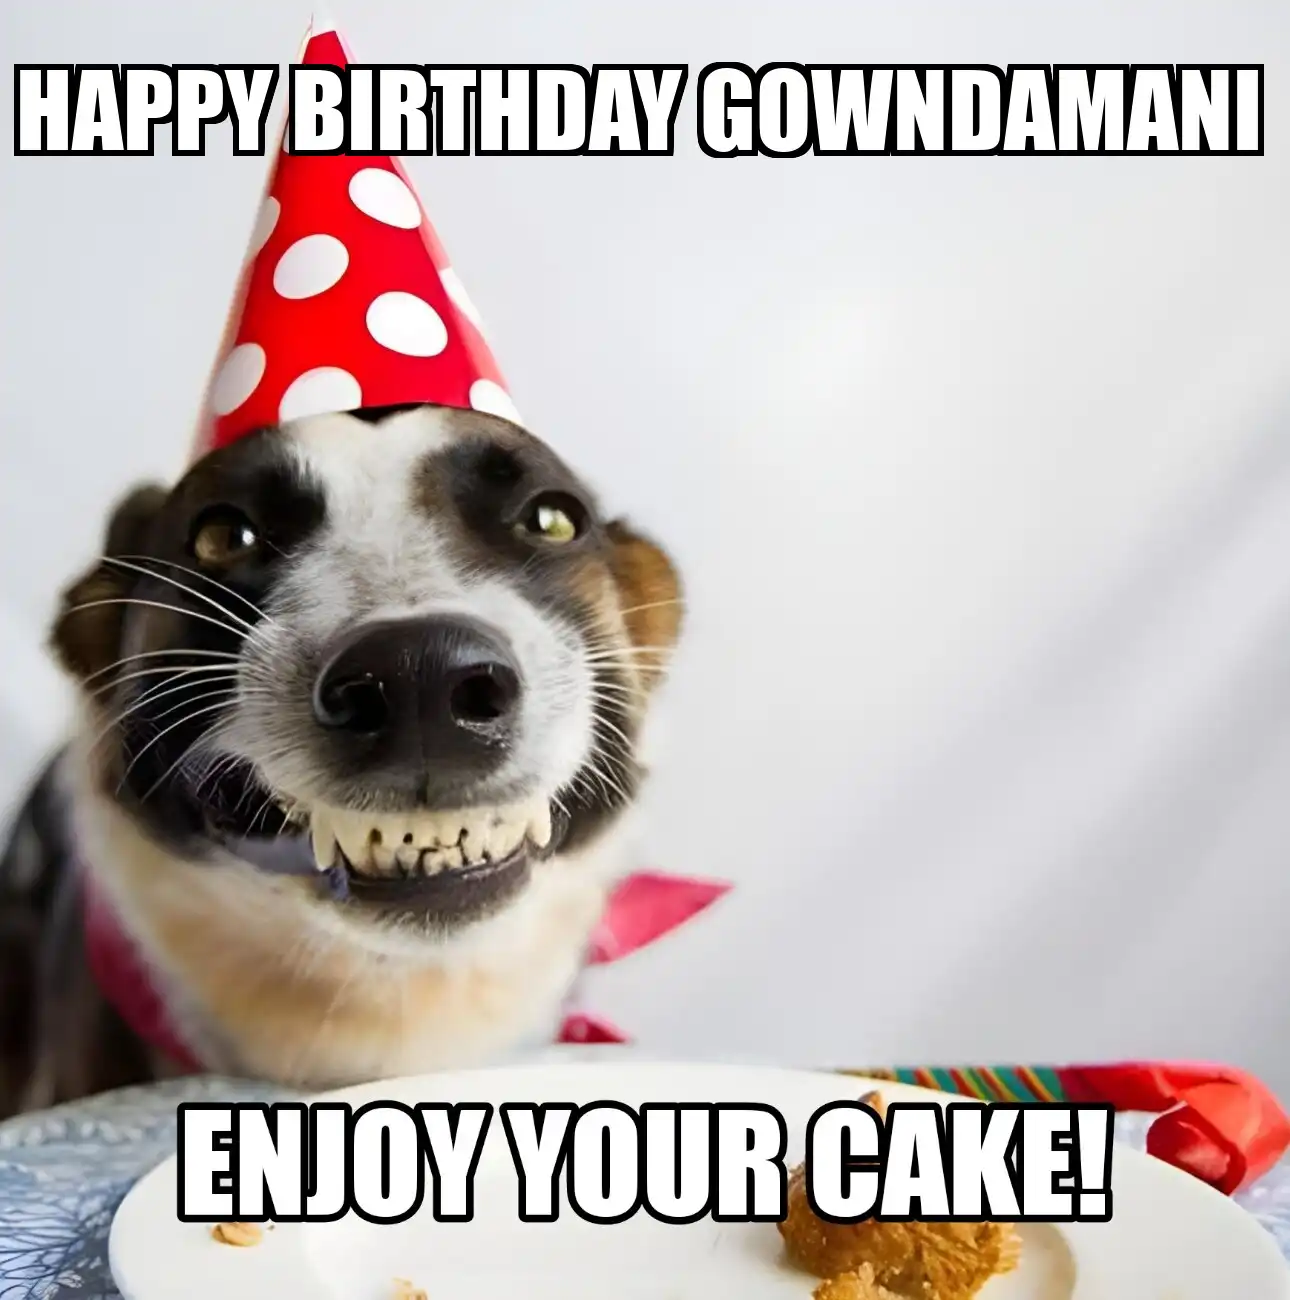 Happy Birthday Gowndamani Enjoy Your Cake Dog Meme